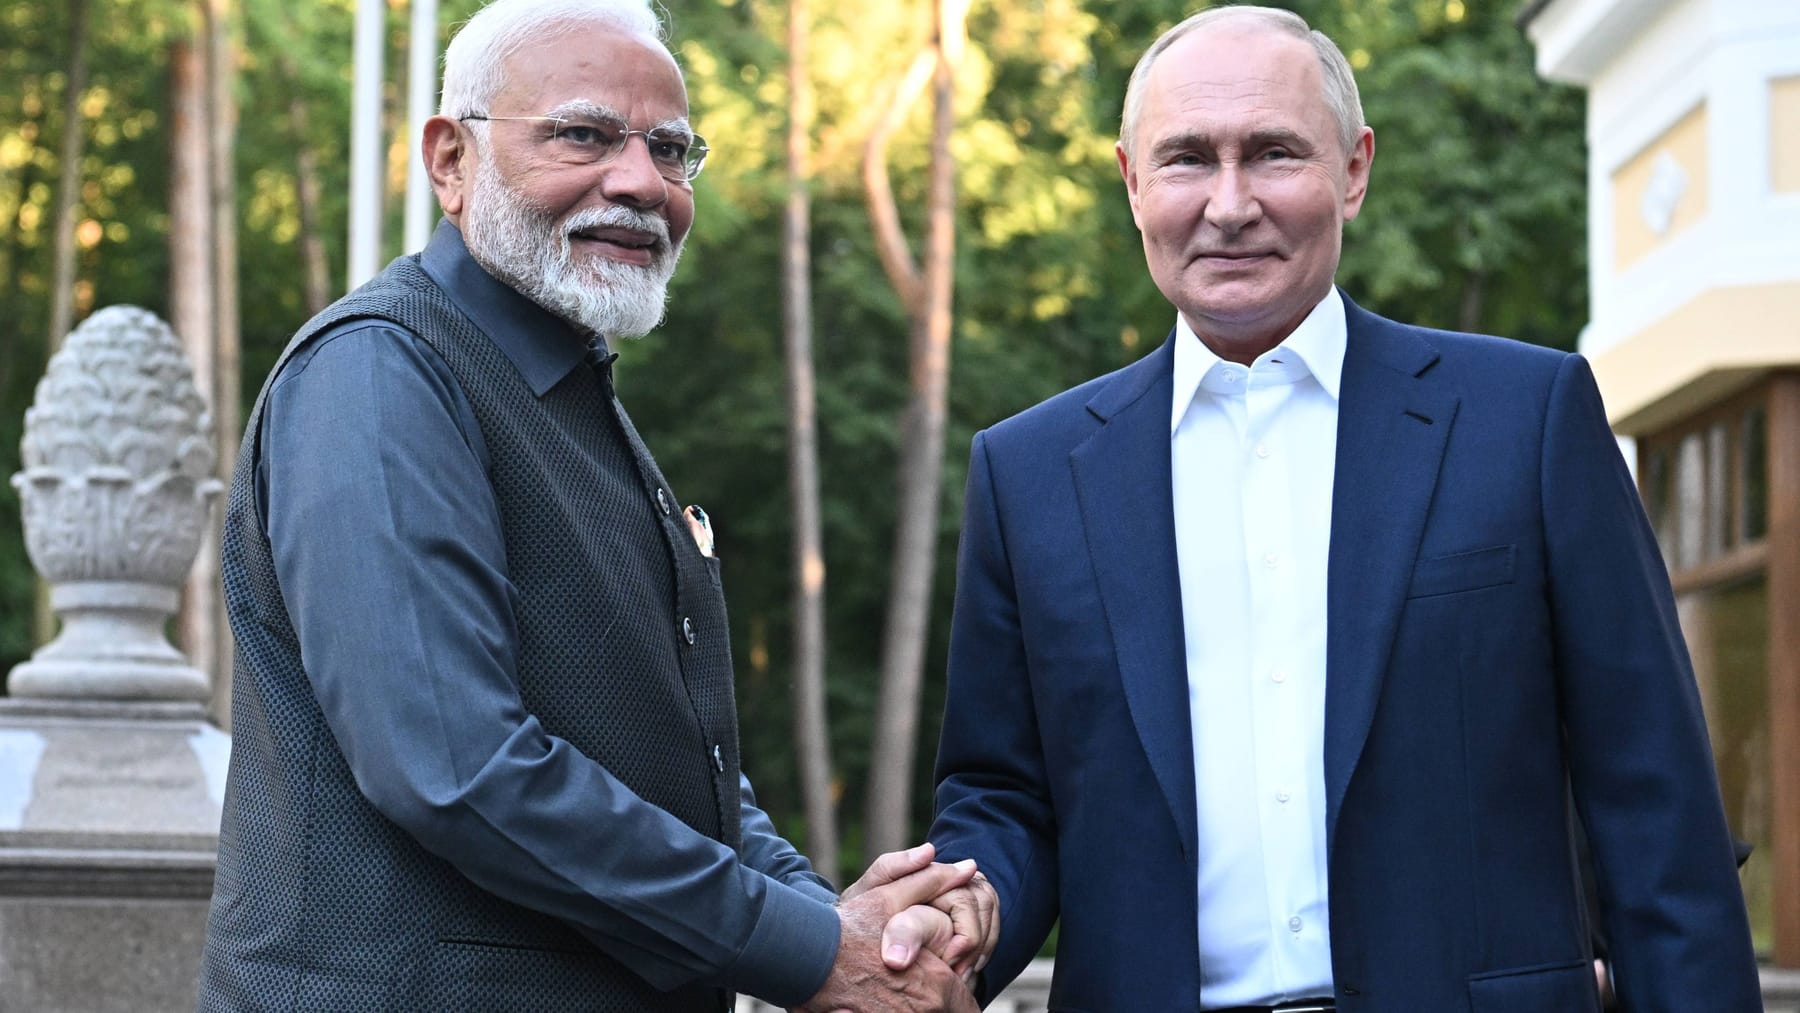 Putin welcomes his “friend” Modi for tea